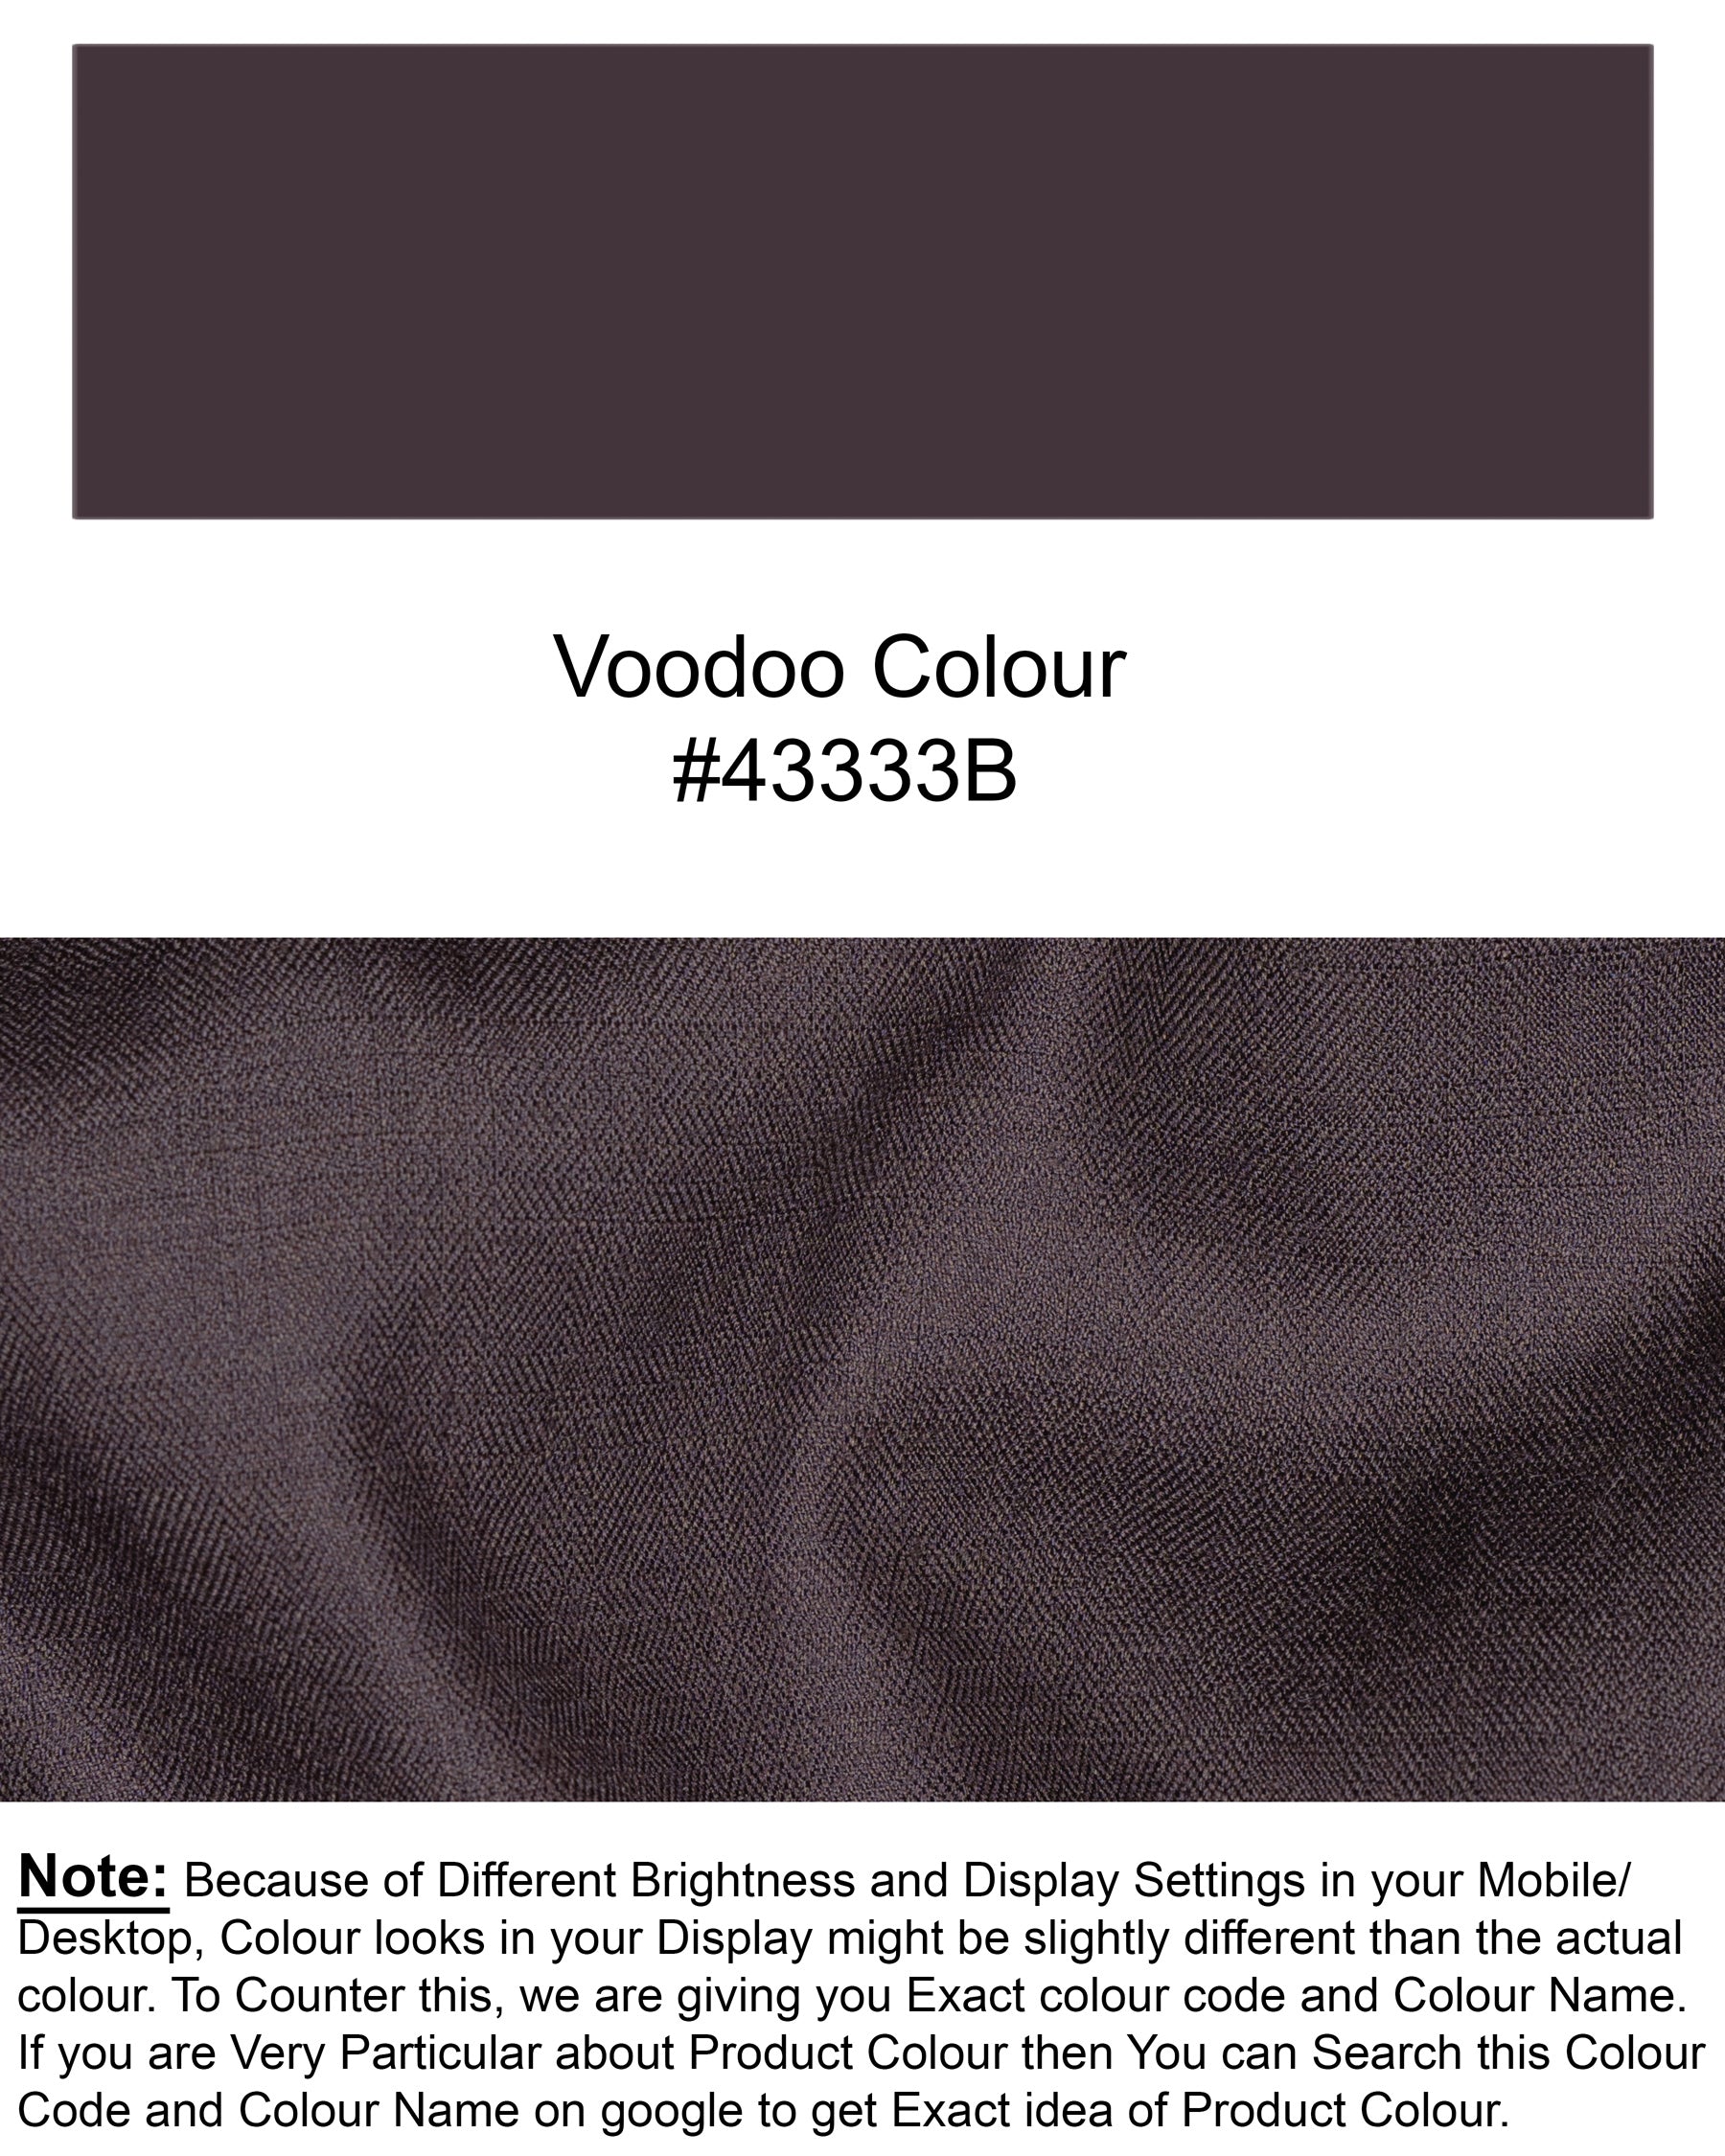 Voodoo Purple Subtle Checked Wool Rich Suit ST1398-SB-36, ST1398-SB-38, ST1398-SB-40, ST1398-SB-42, ST1398-SB-44, ST1398-SB-46, ST1398-SB-48, ST1398-SB-50, ST1398-SB-52, ST1398-SB-54, ST1398-SB-56, ST1398-SB-58, ST1398-SB-60